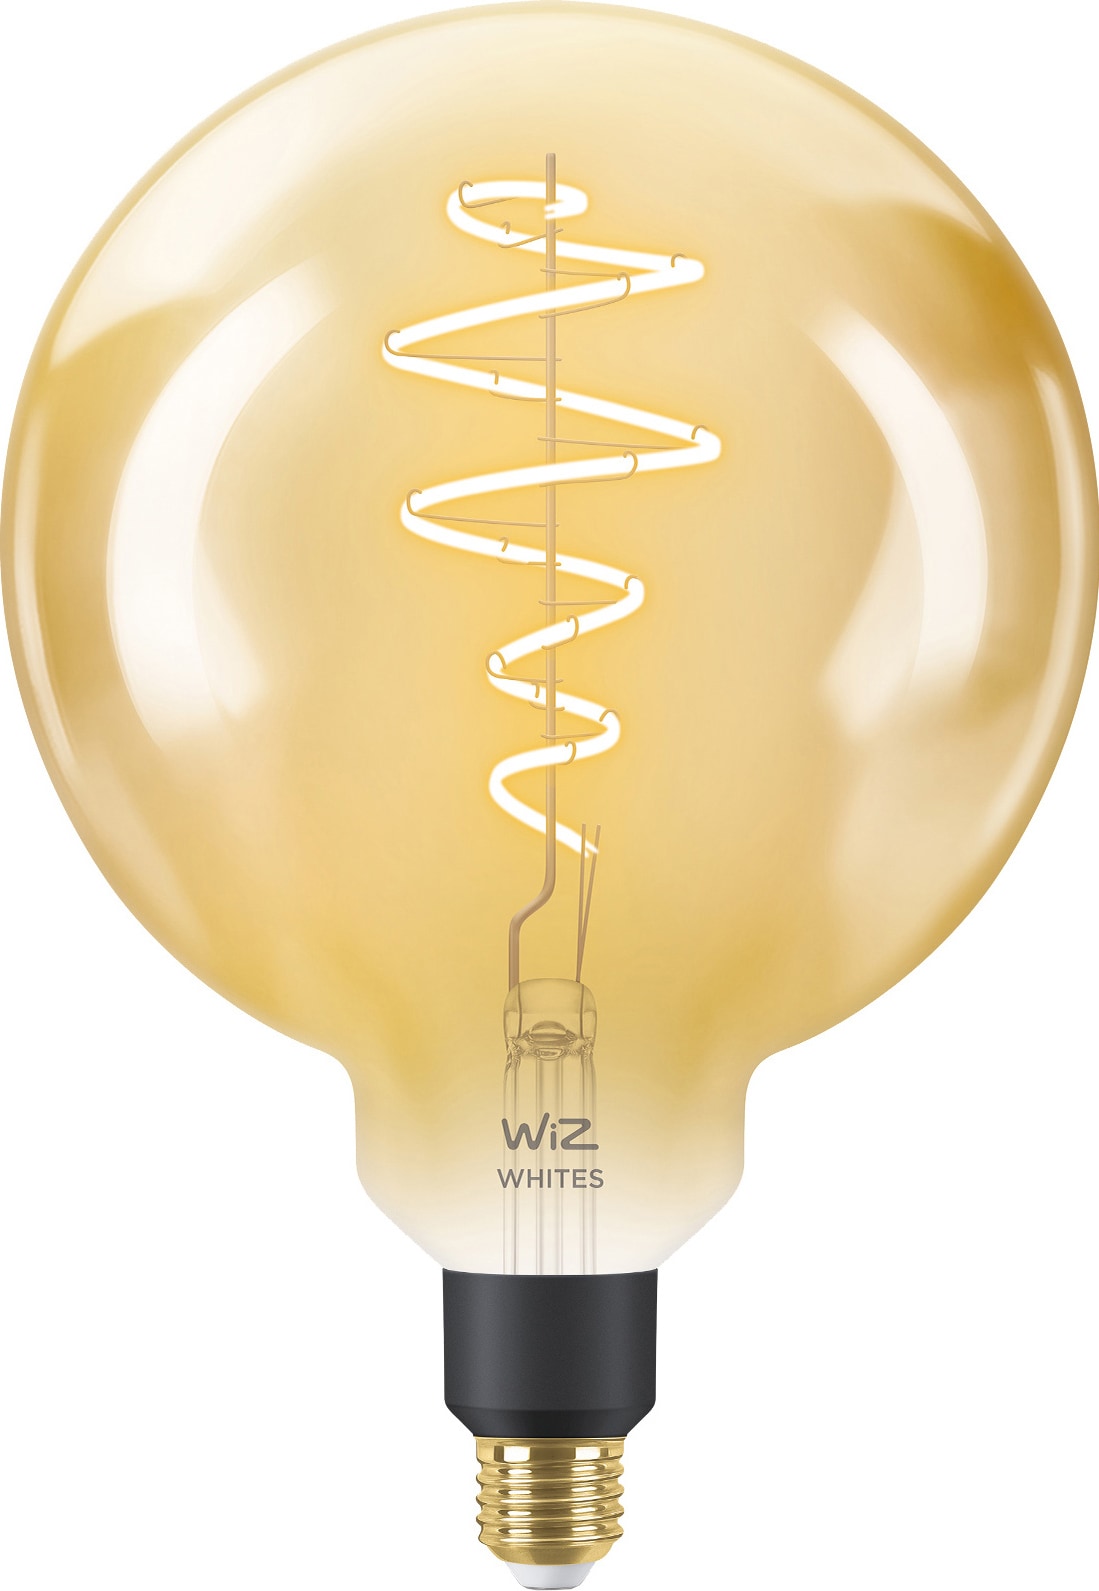 Se Wiz Light Globe LED-pære 25W E27 871869978683000 hos Elgiganten